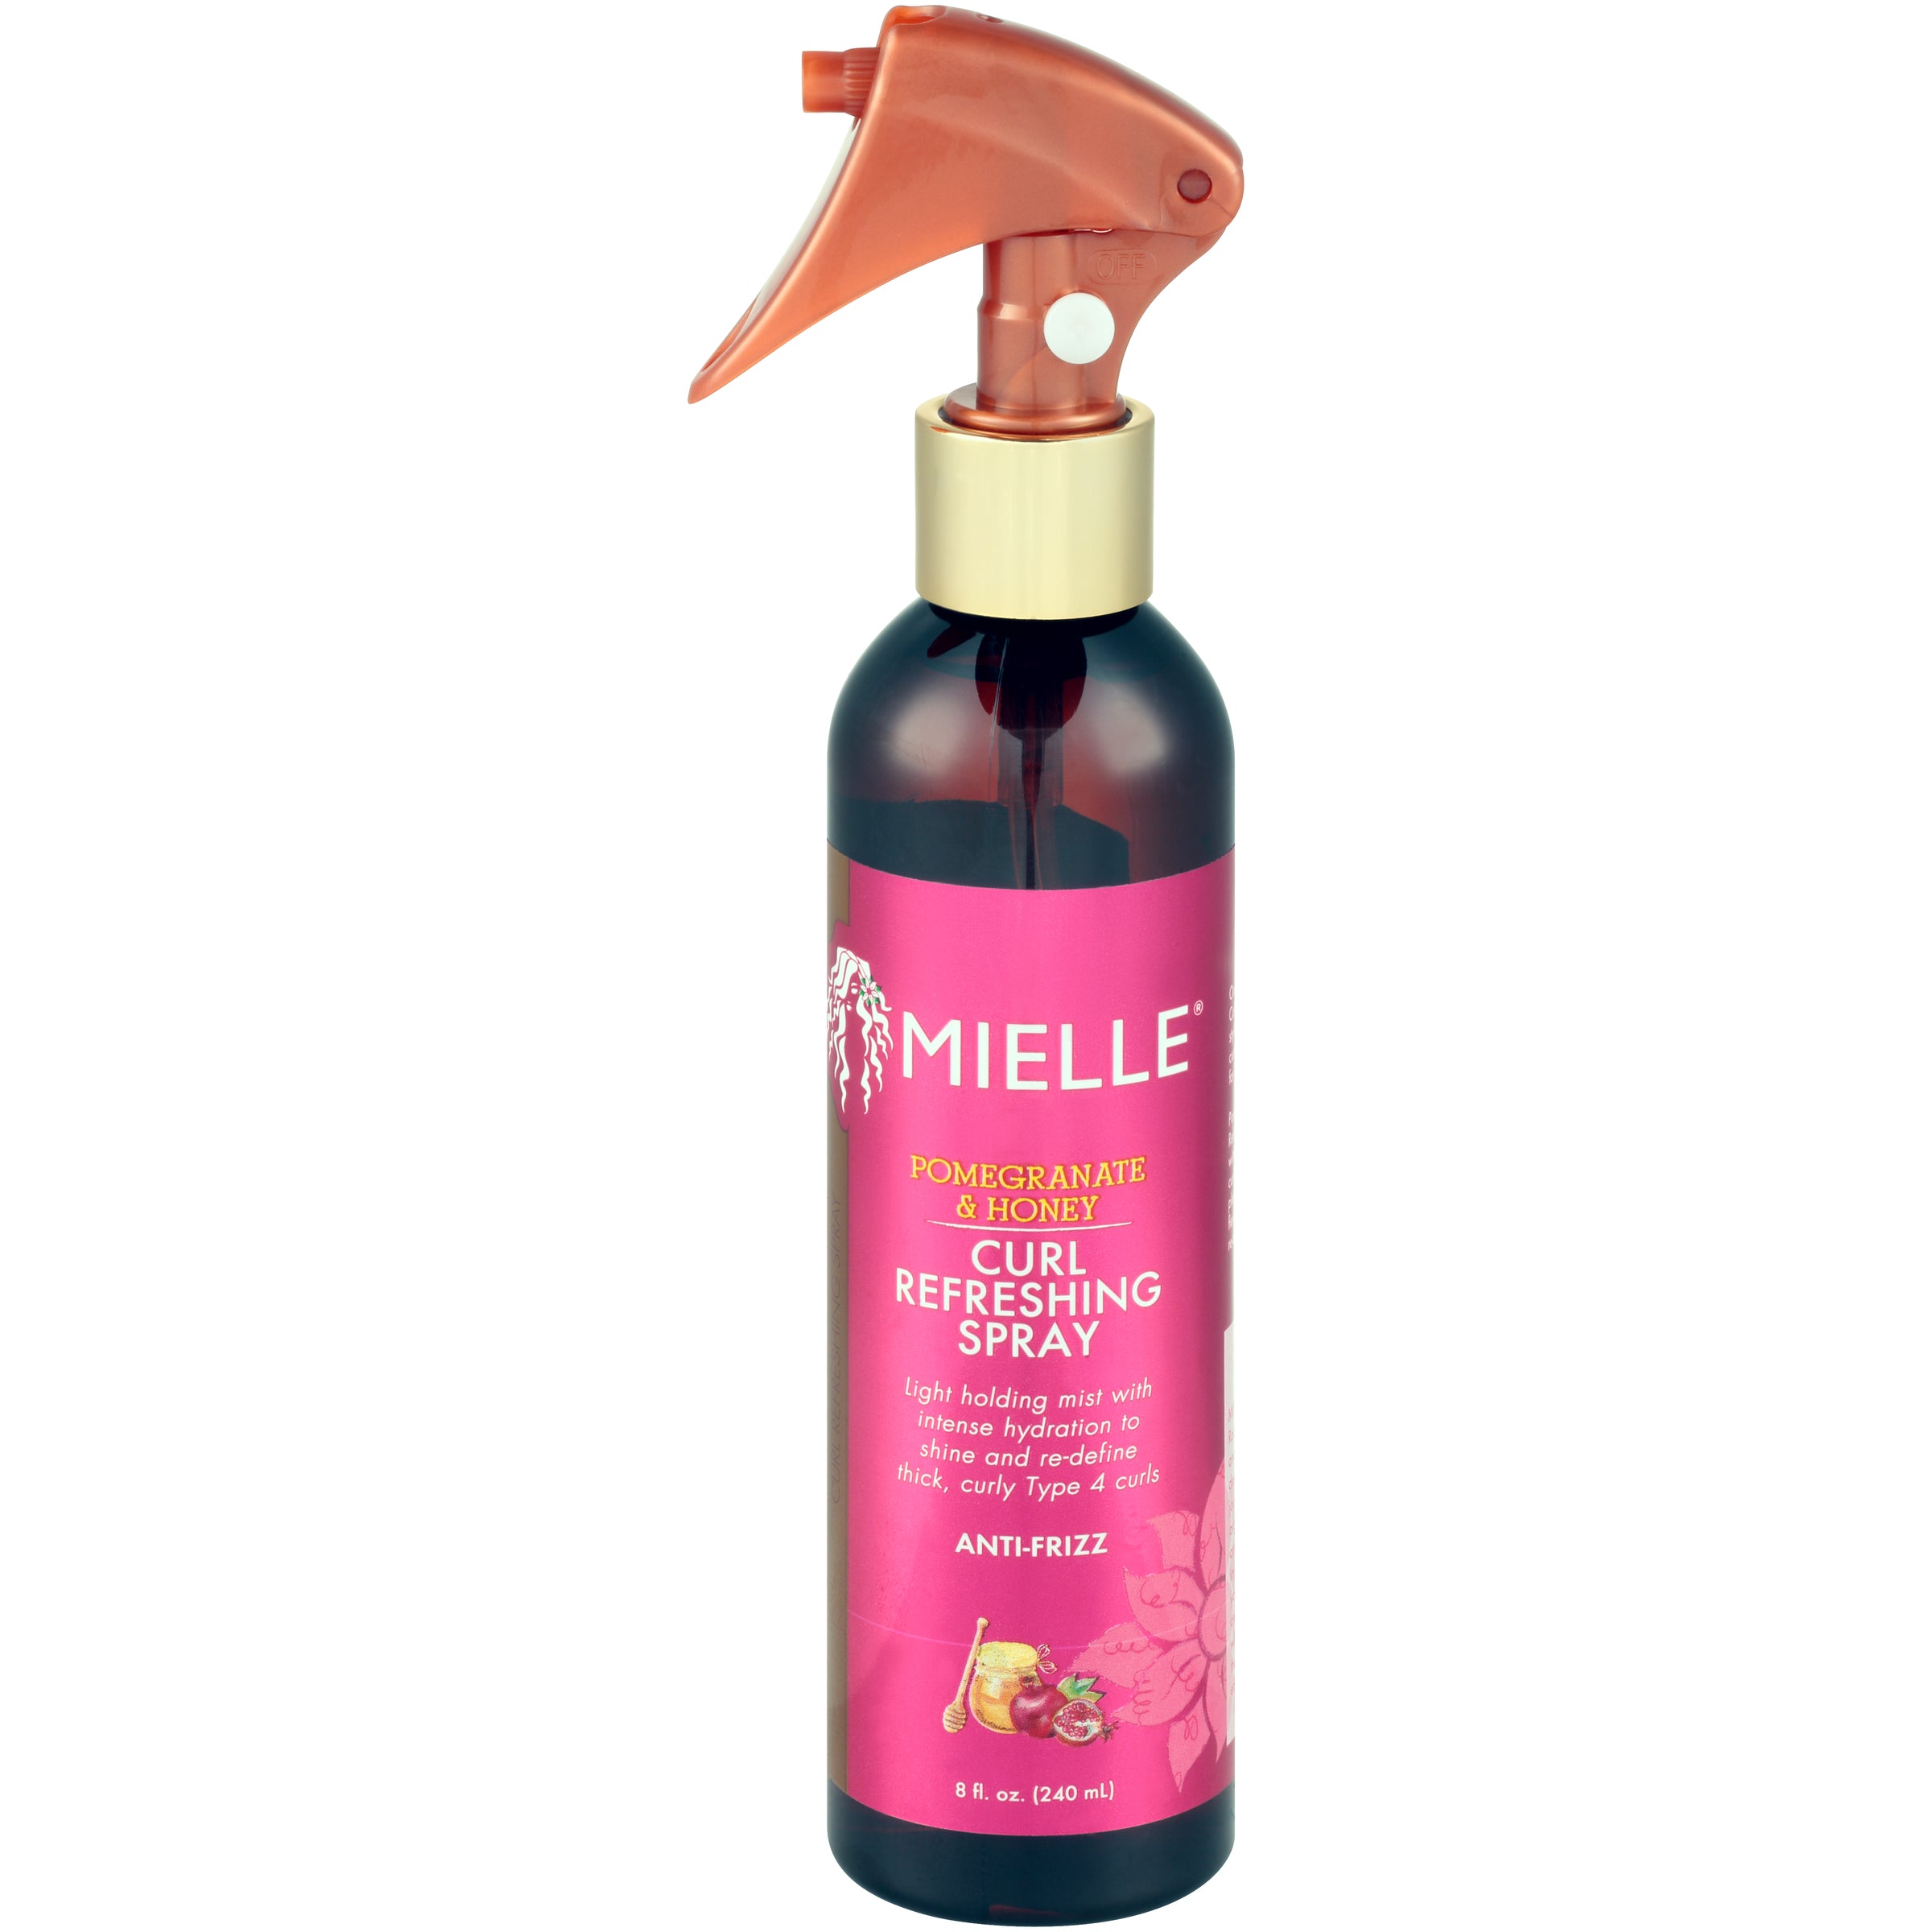 Mielle Pomegranate & Honey Refreshing Spray